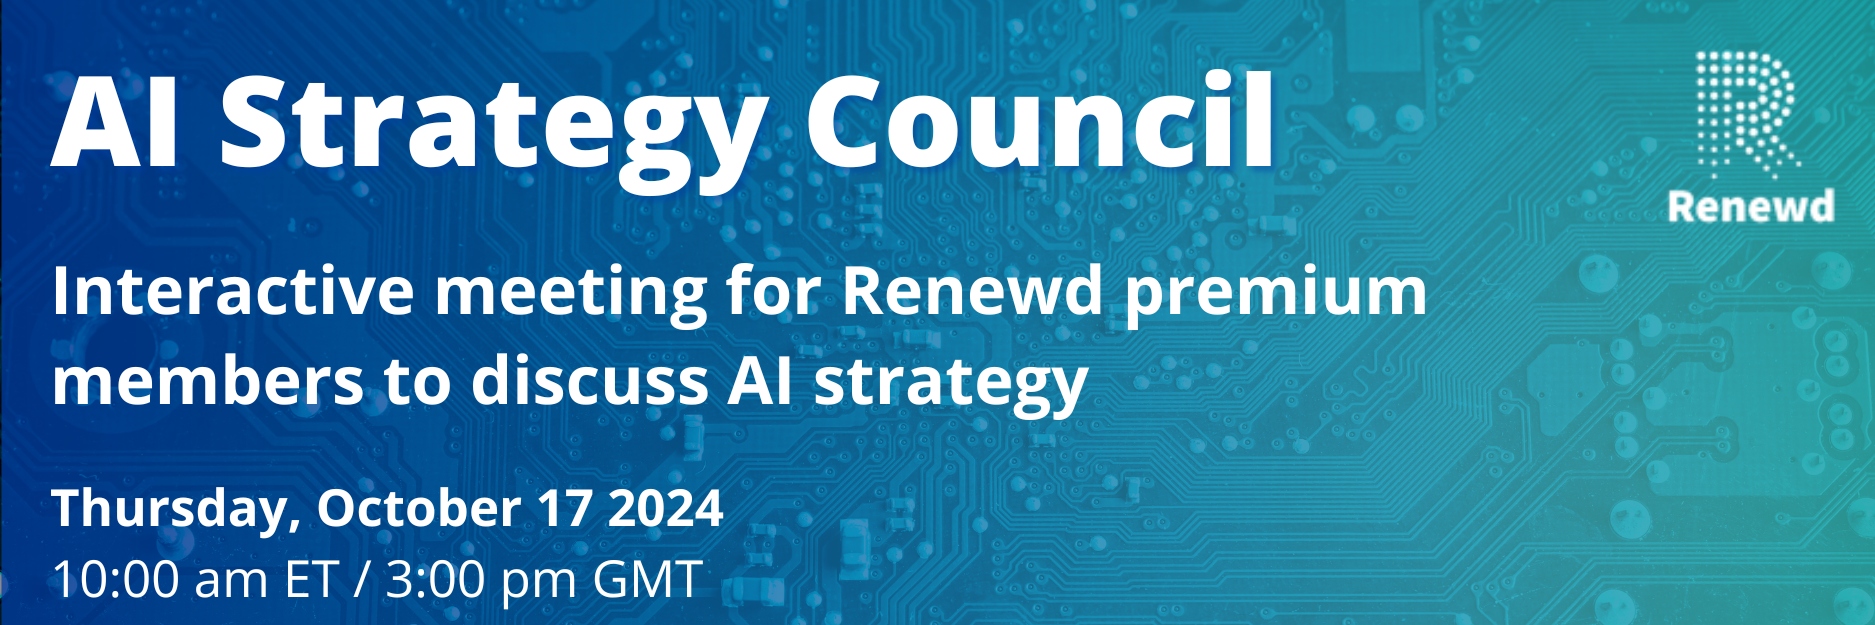 Renewd AI strategy council meeting October